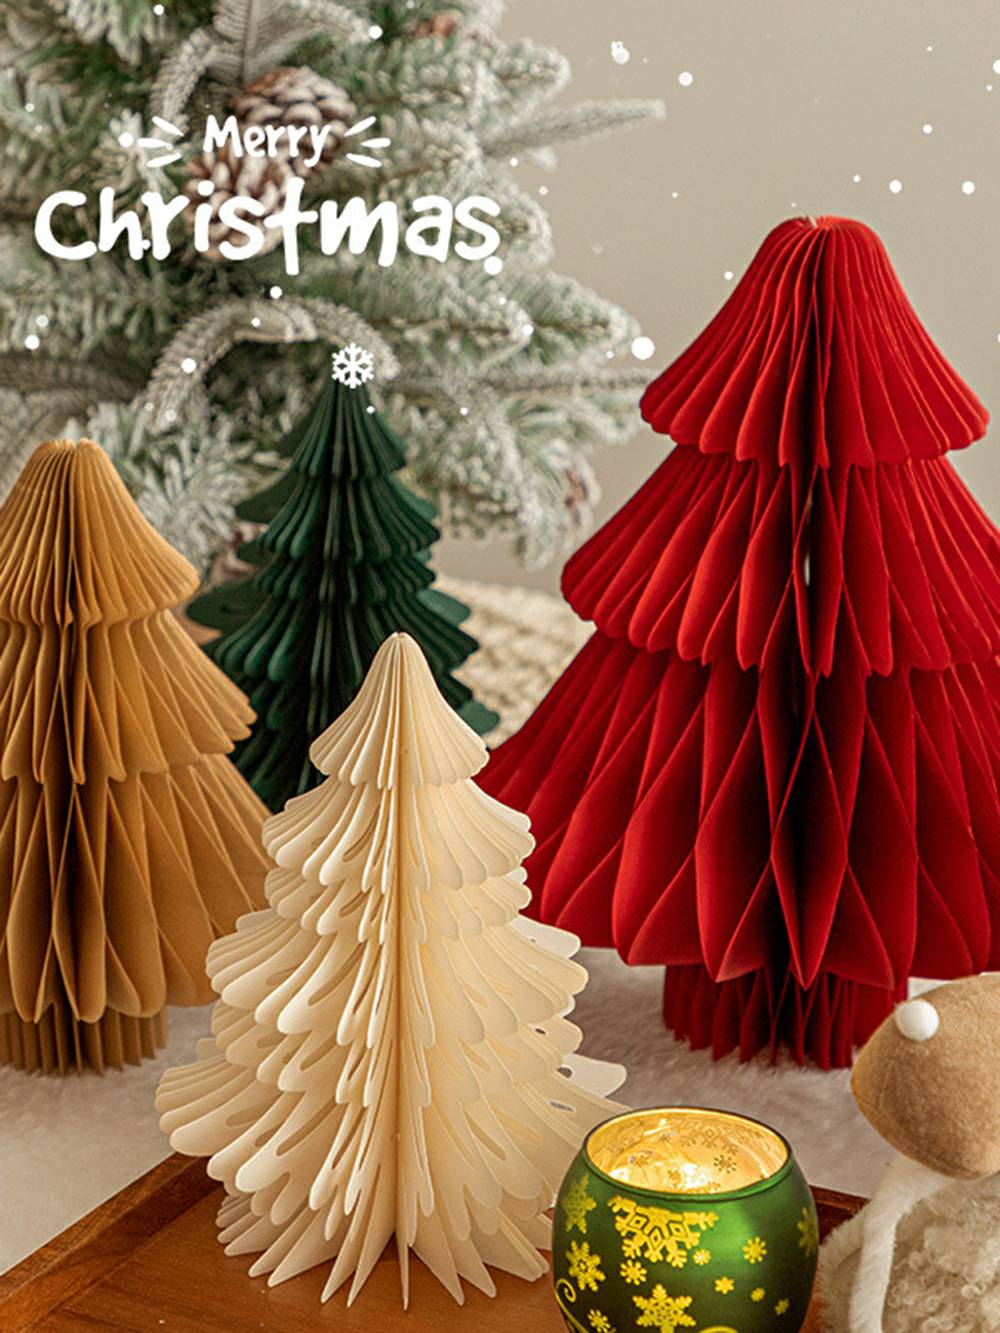 Estatuetas de favos de mel de árvore de Natal de papel estilo acordeão